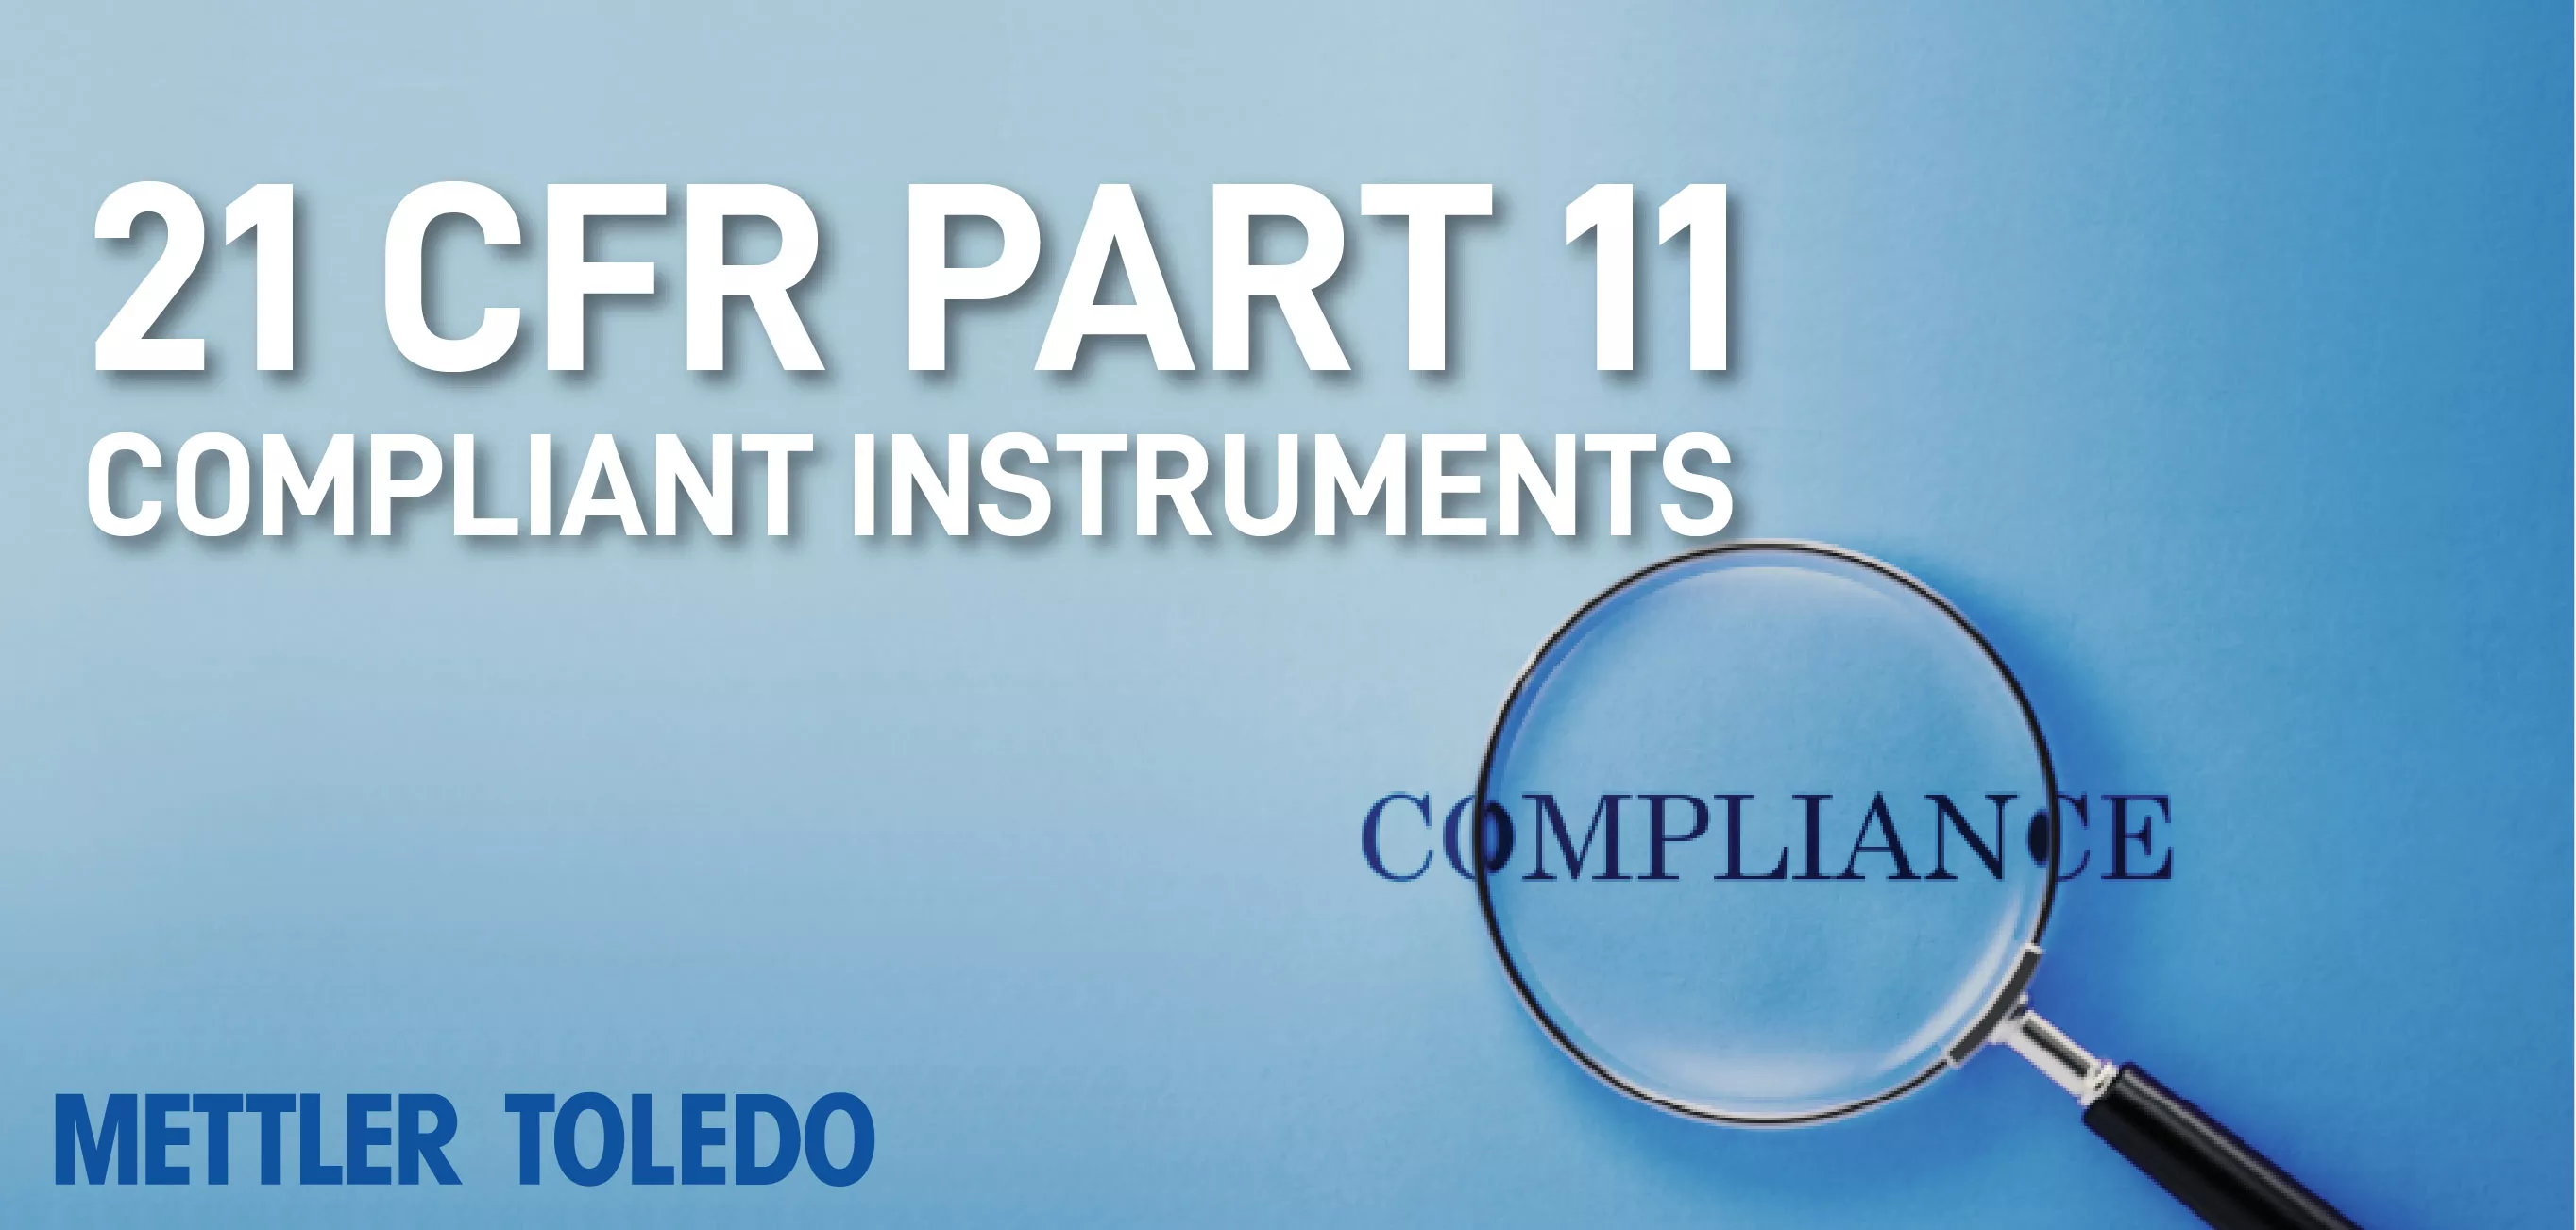 21 CFR Part 11 Compliant Instruments by METTLER TOLEDO Webinar